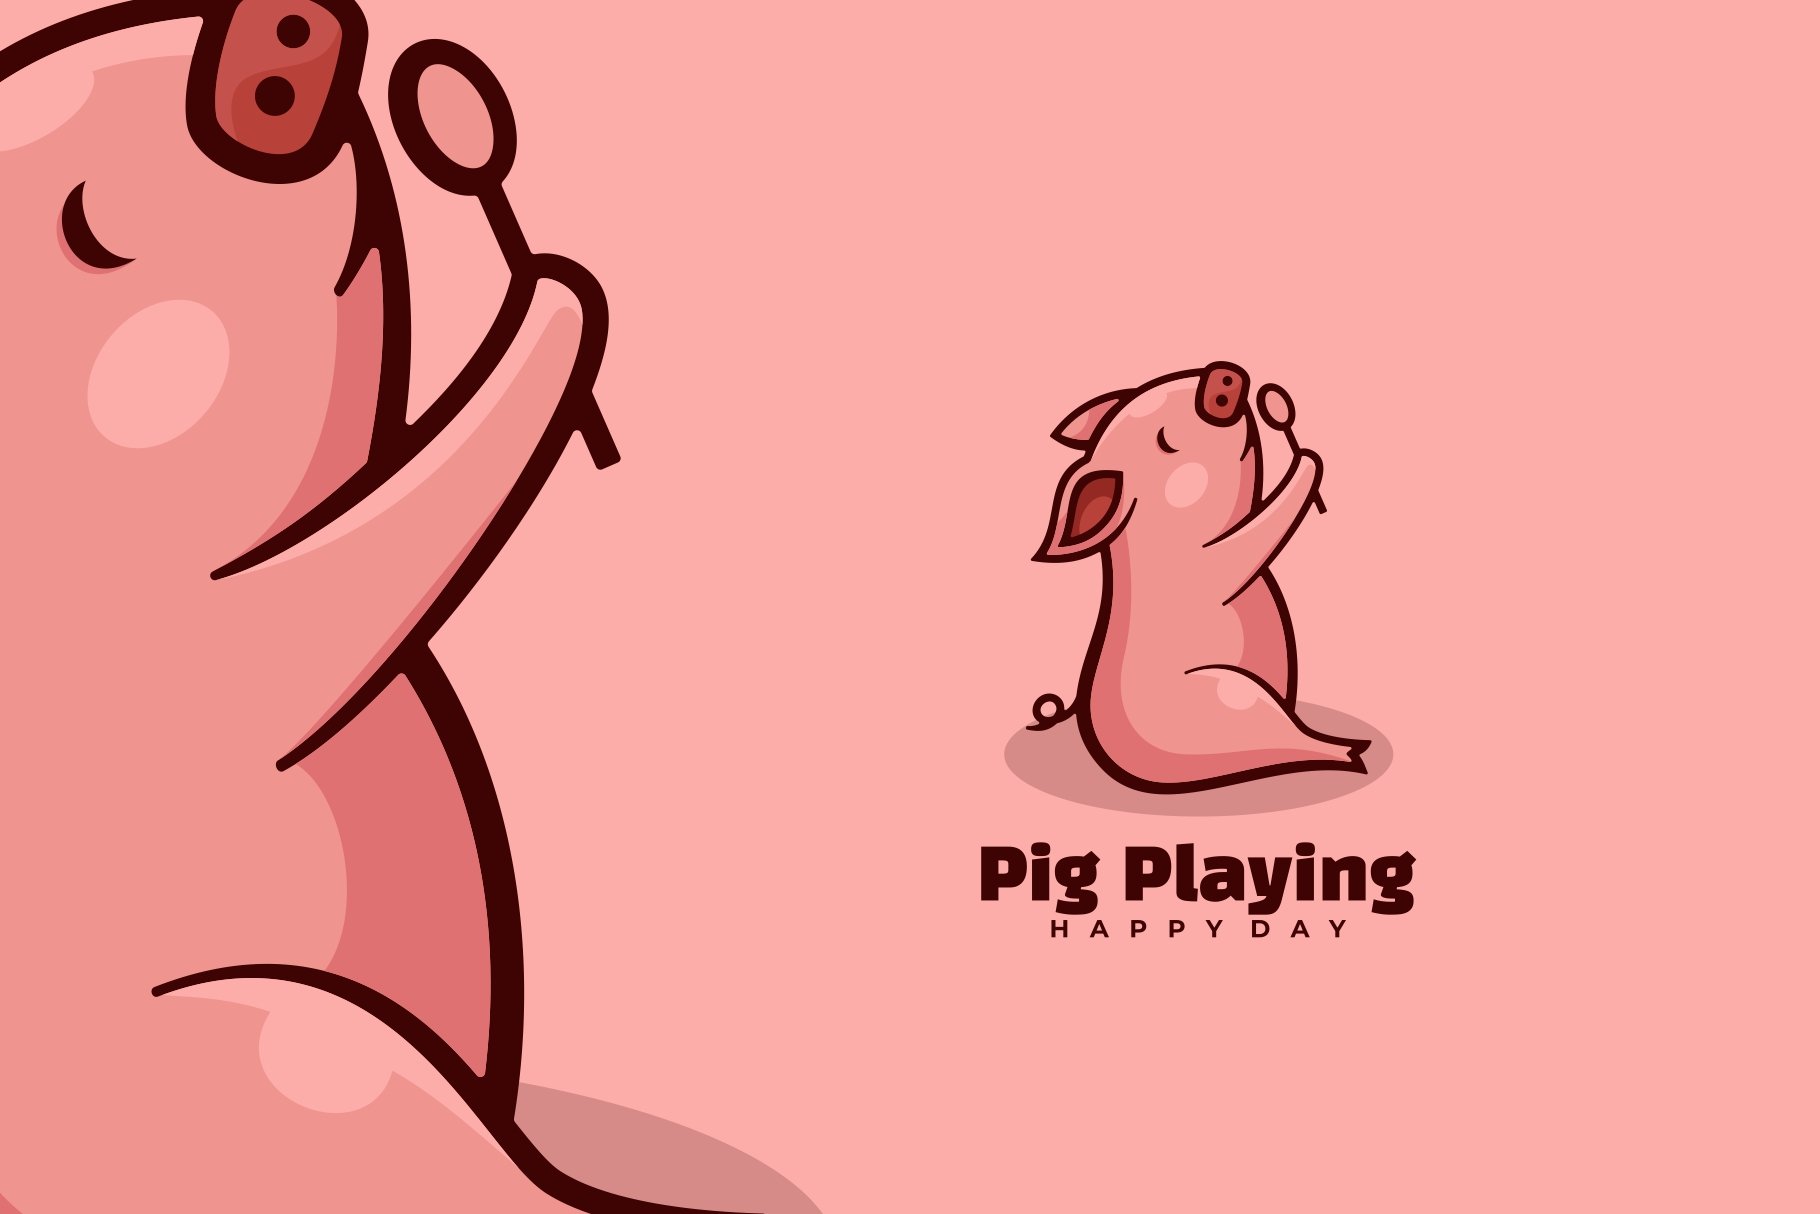 Pig Simple Mascot Logo cover image.